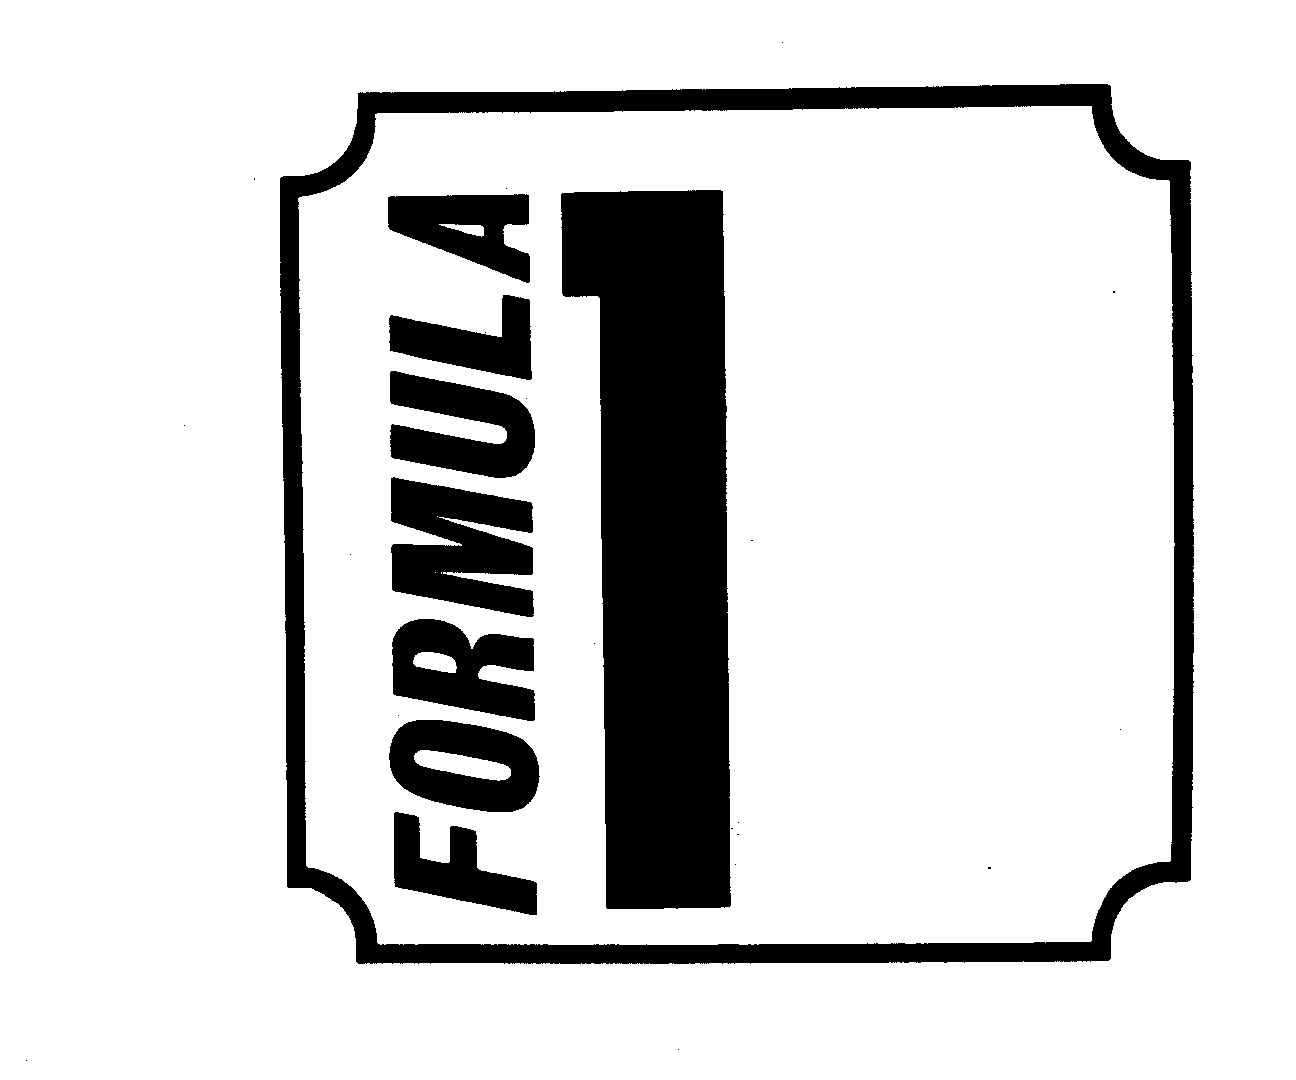  FORMULA 1